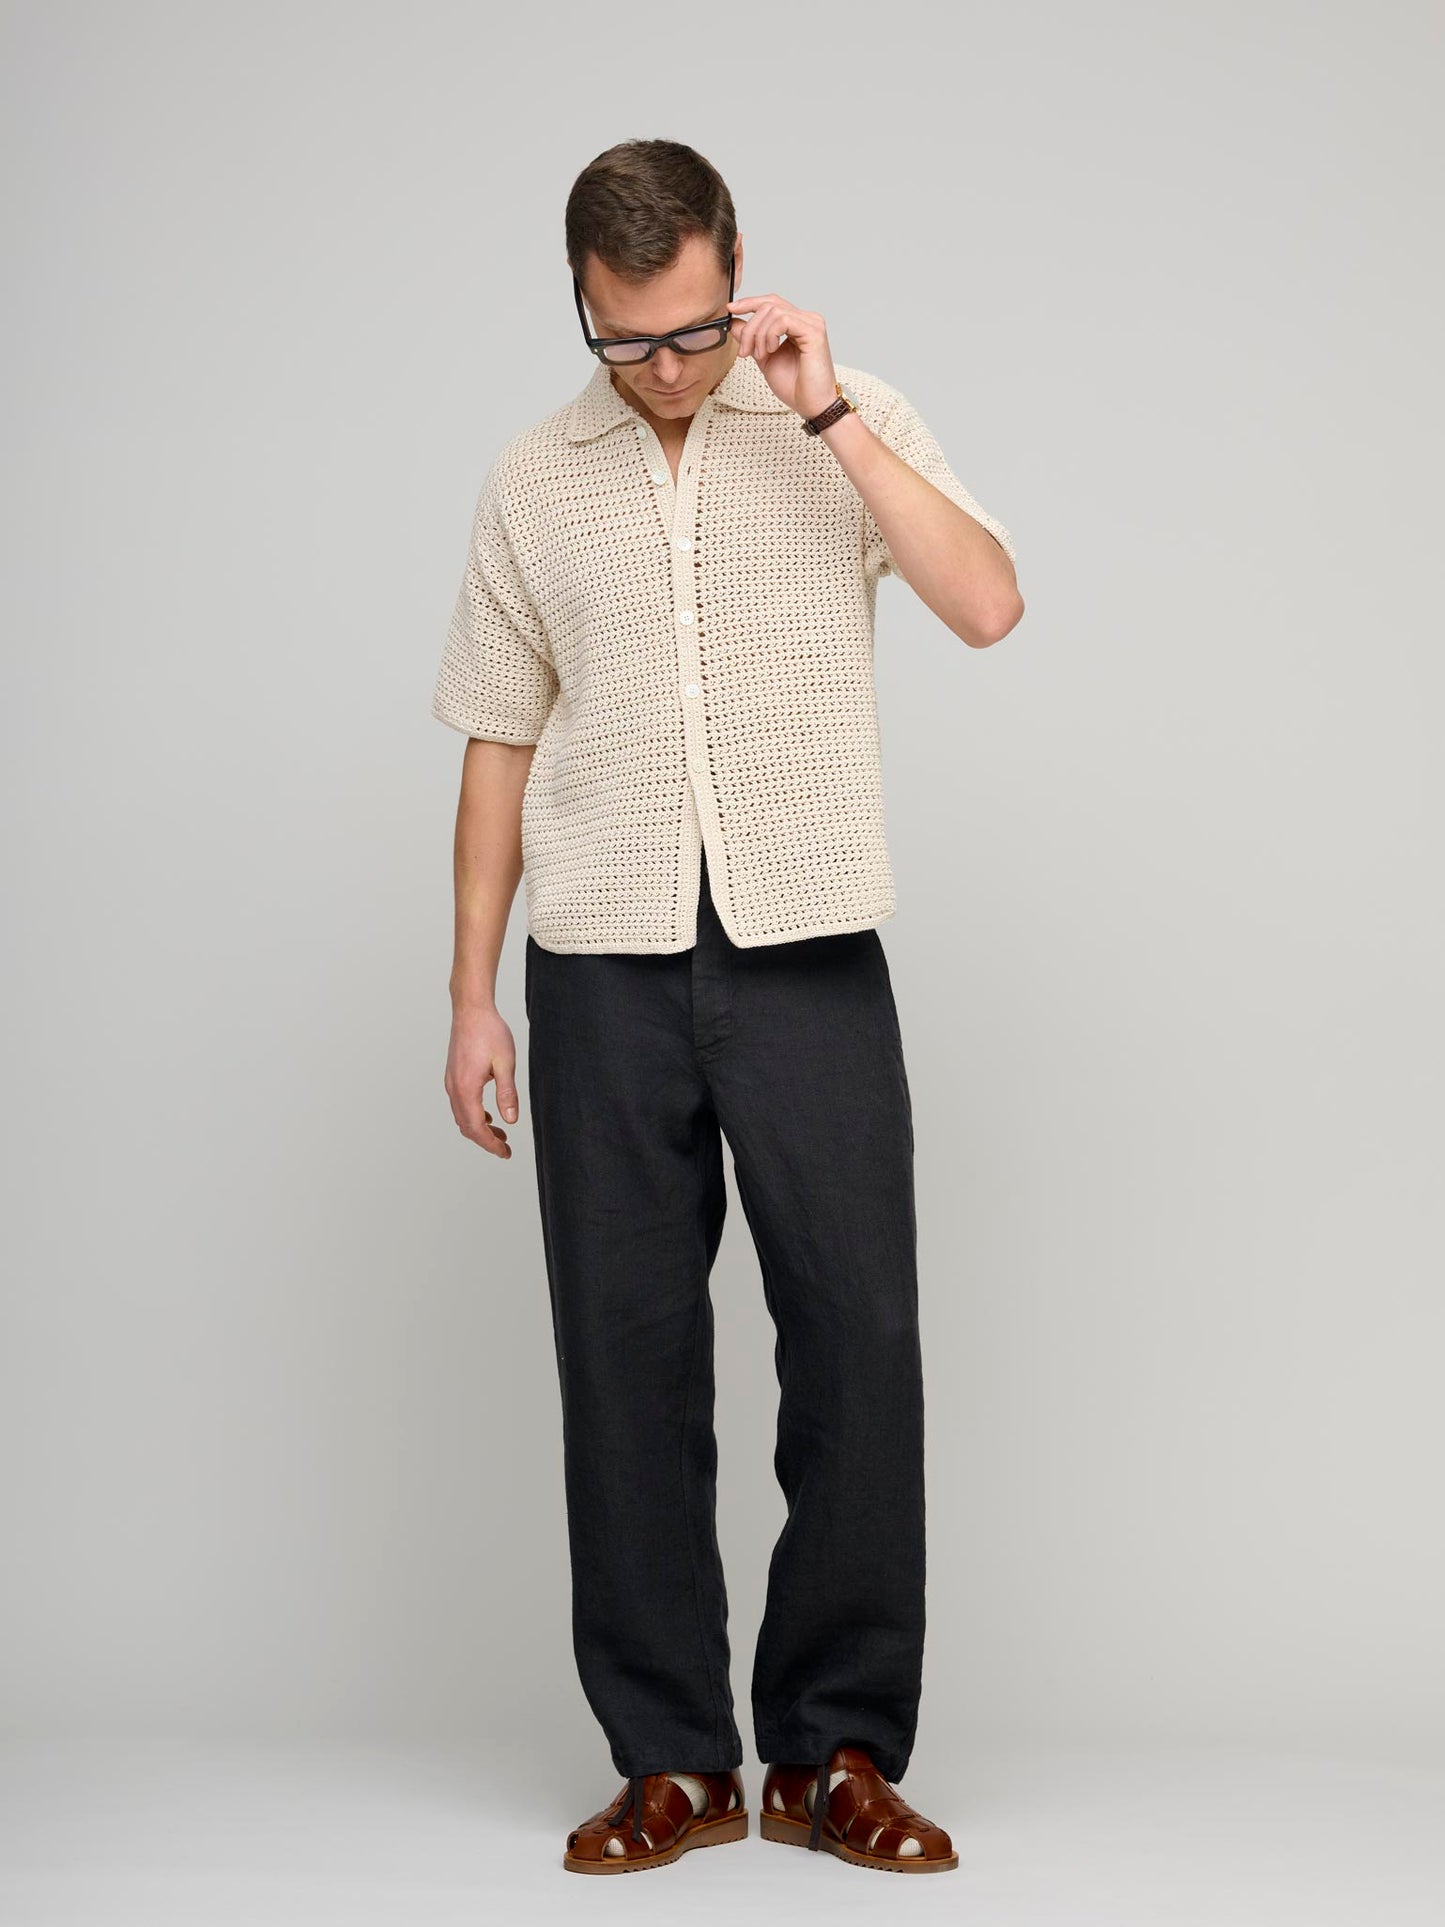 Hand Crochet Knit Half Sleeved Shirt, Ivory